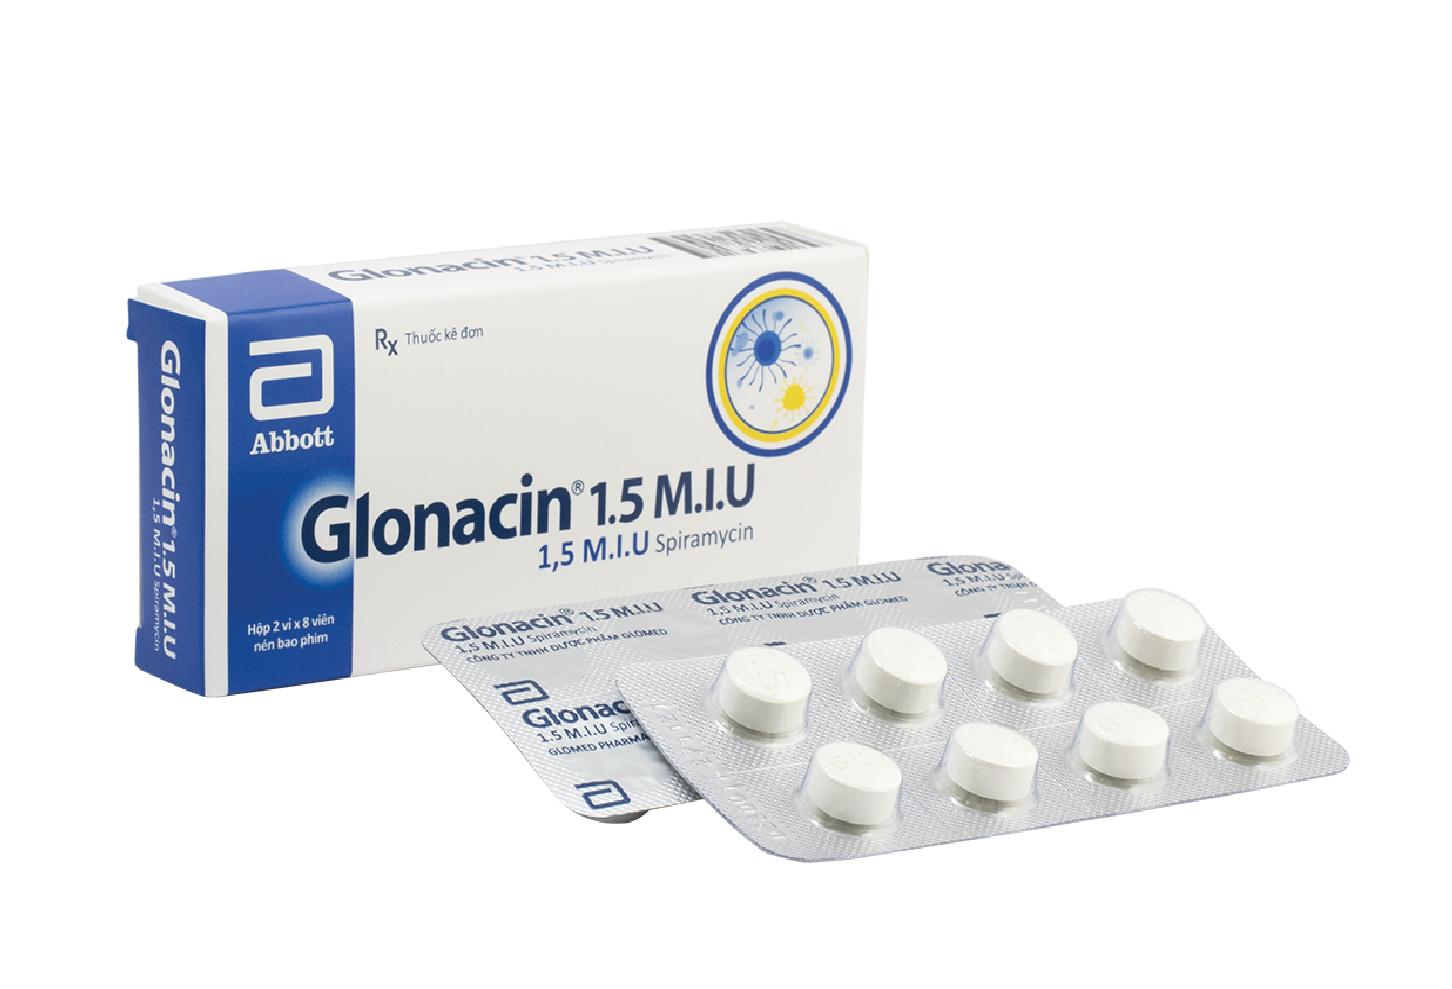 Glonacin (Spiramycin) 1.5 M.I.U Glomed (H/16v)